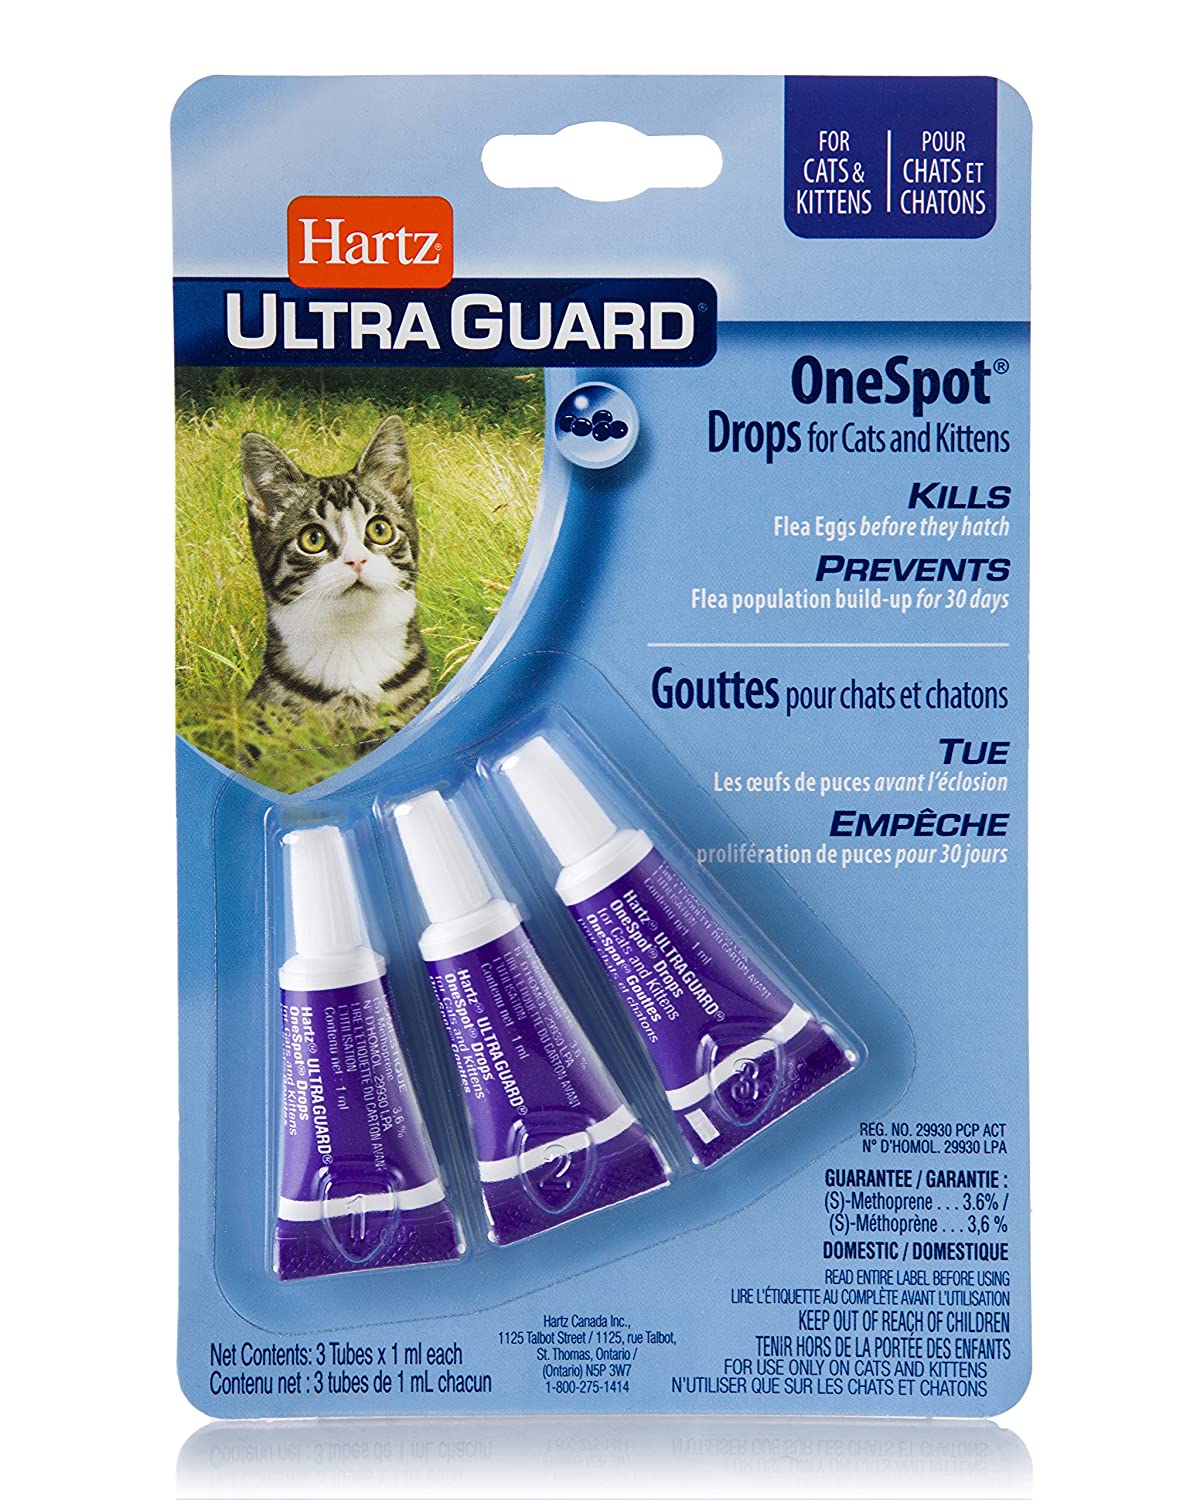 Hartz Ultra Guard OneSpot Flea/Egg Drops for Cats and Kittens